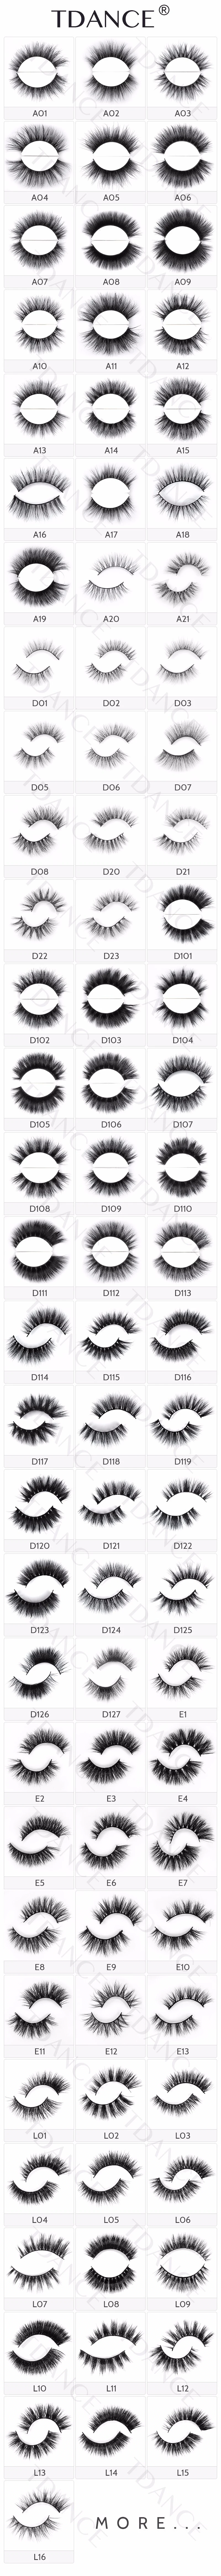 Best Price 5D Eyelashes Real Mink Lahes 3D Mink Eyelashes with Custom Eyelash Packaging